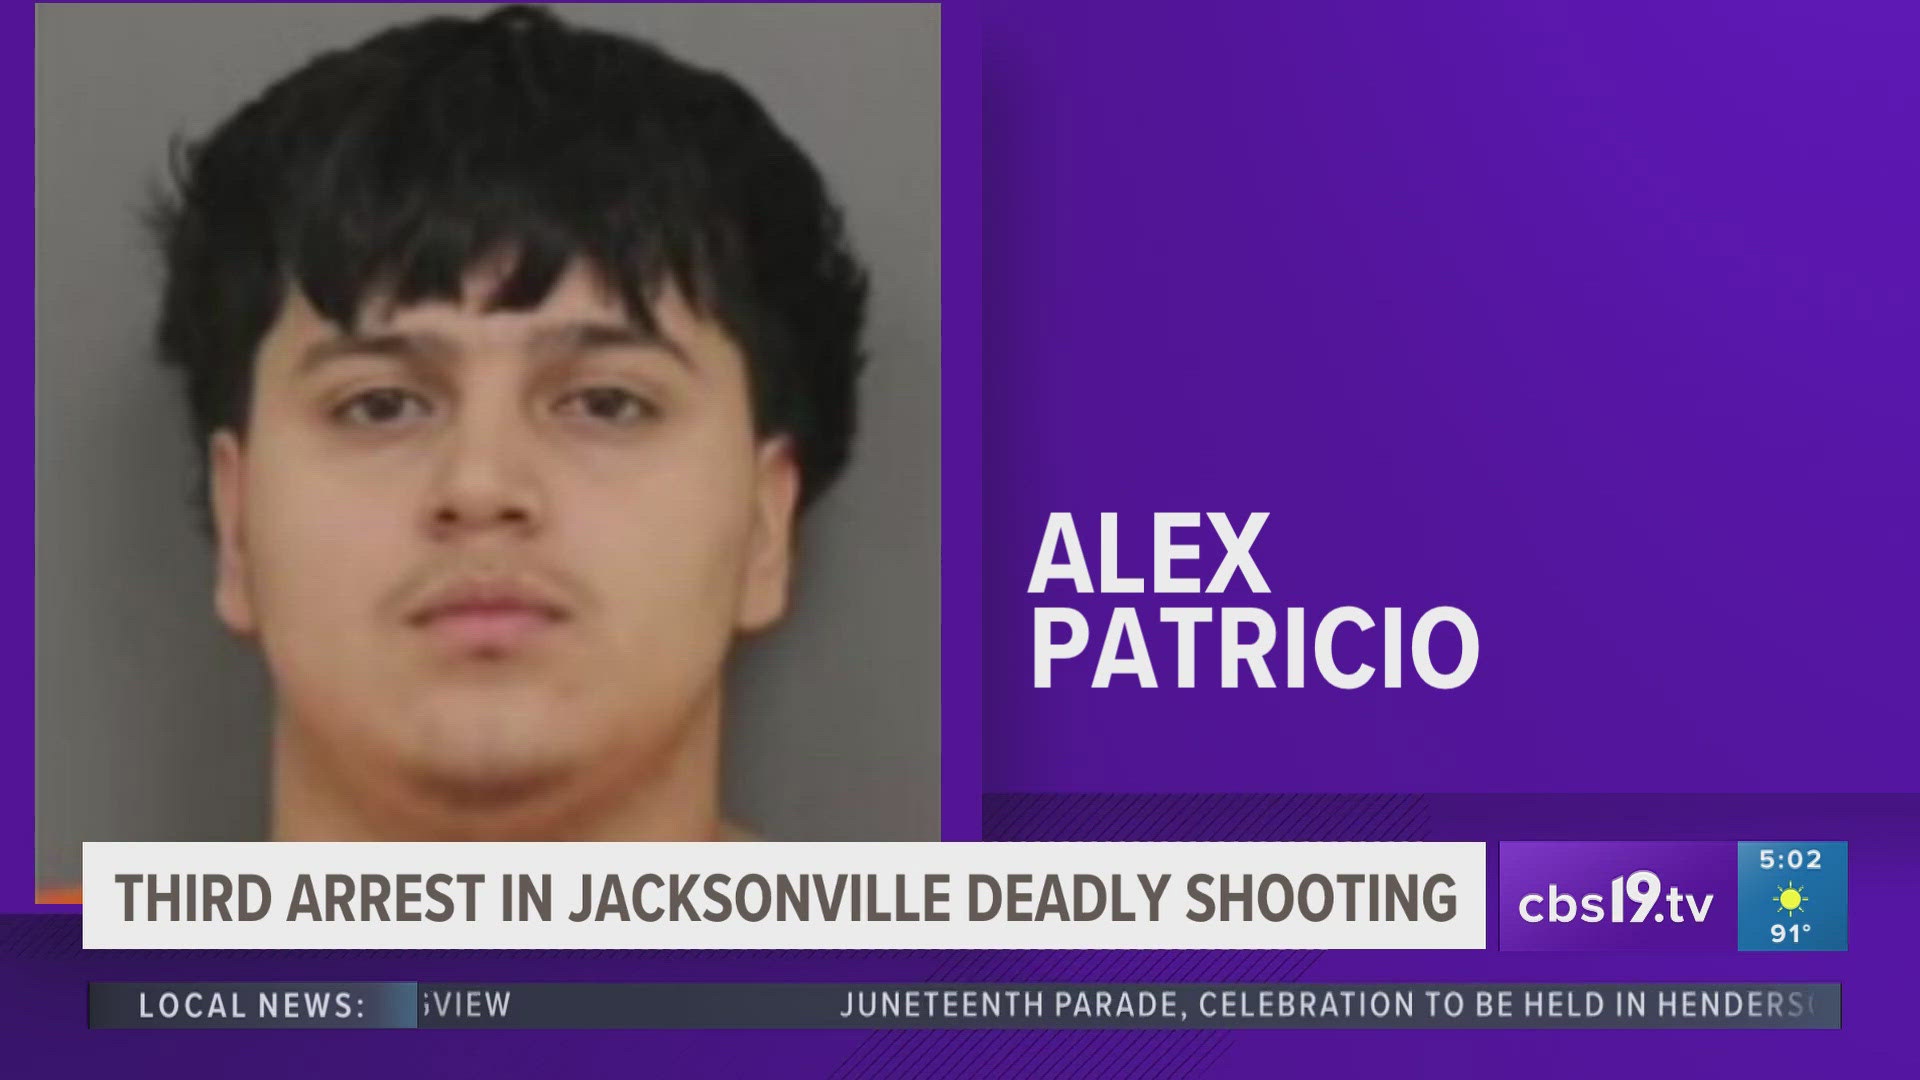 Third arrest in Jacksonville deadly shooting